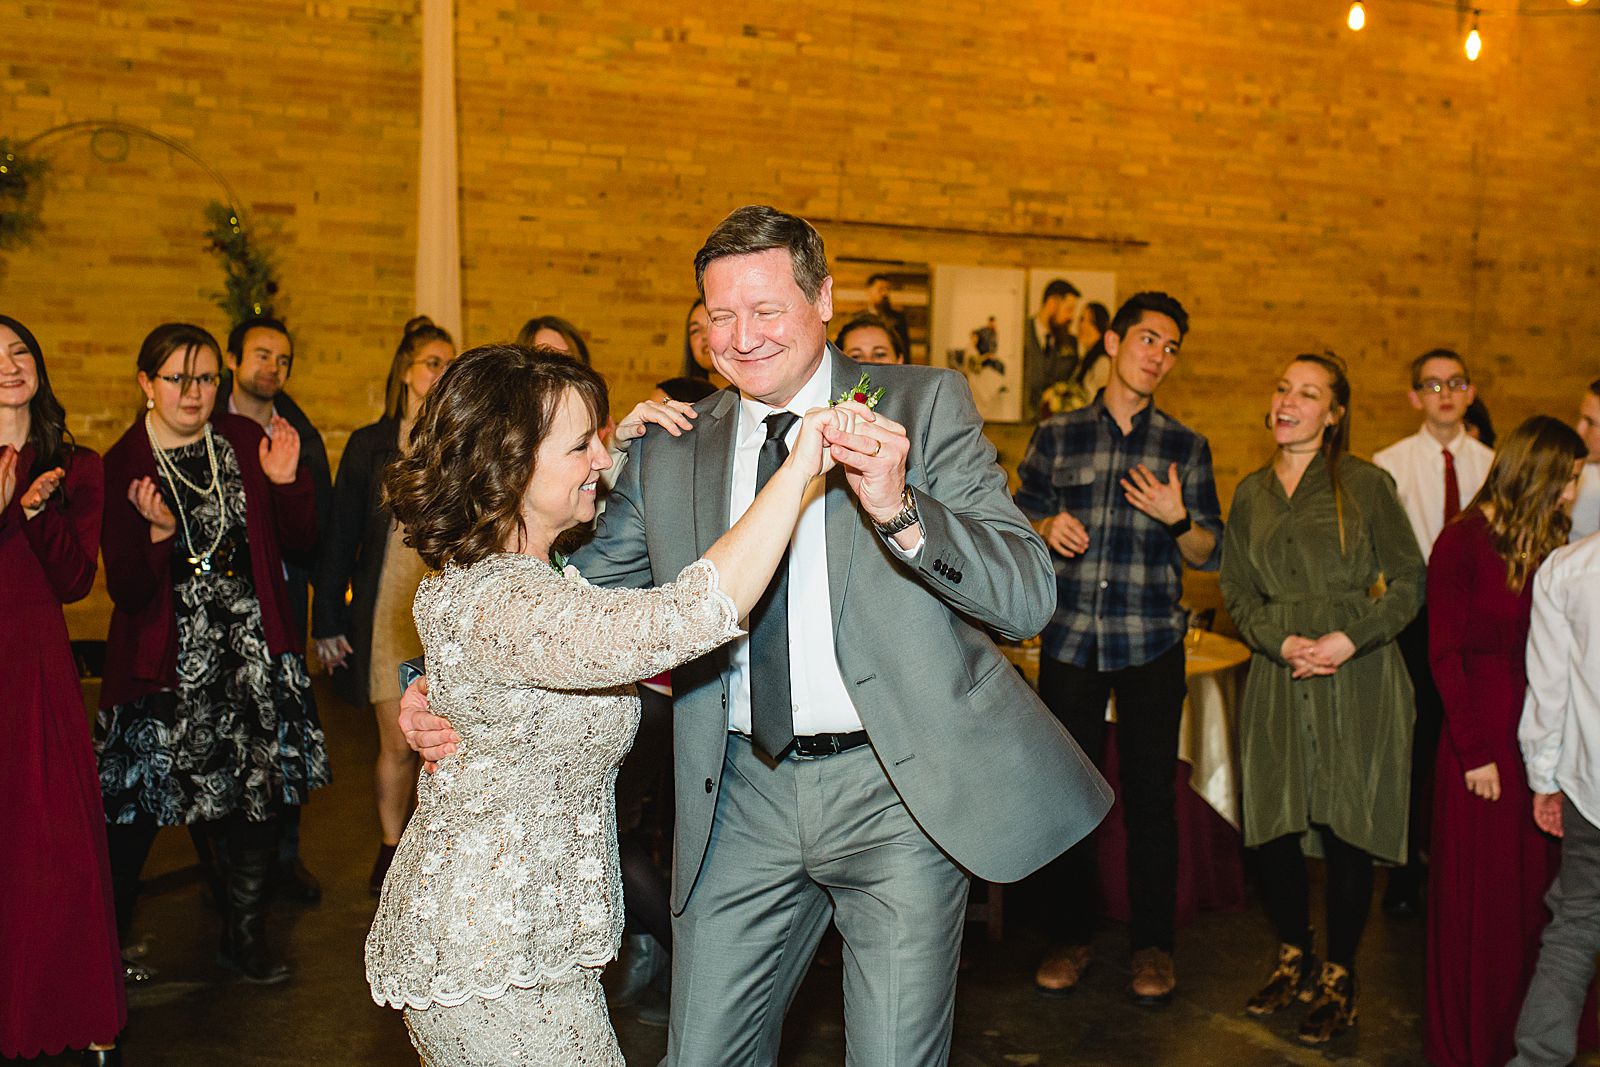 Copper Nickel Event Center | Wedding Reception Dance Party